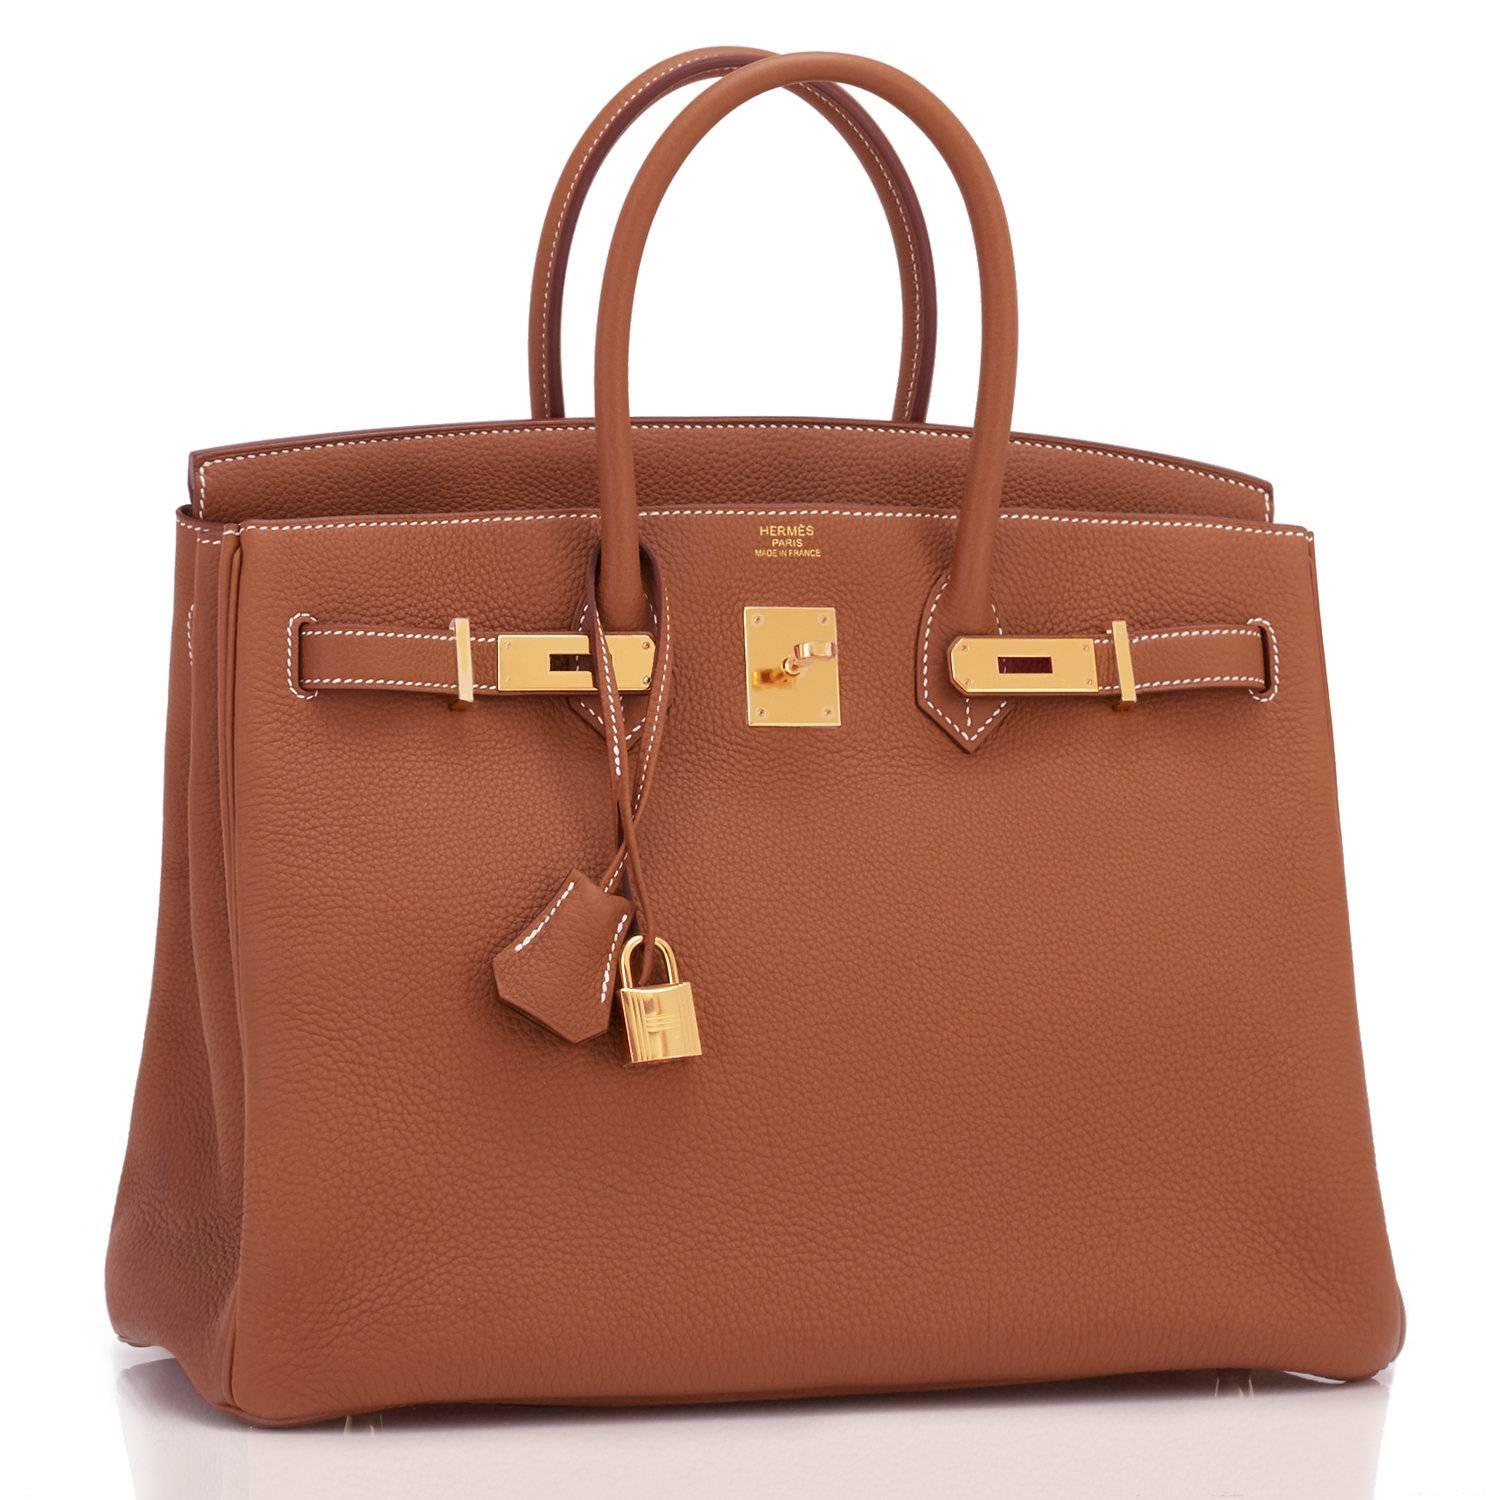 Women's or Men's Hermes Birkin 35 Gold Togo Tan Gold Hardware Bag Brand New in Box For Sale